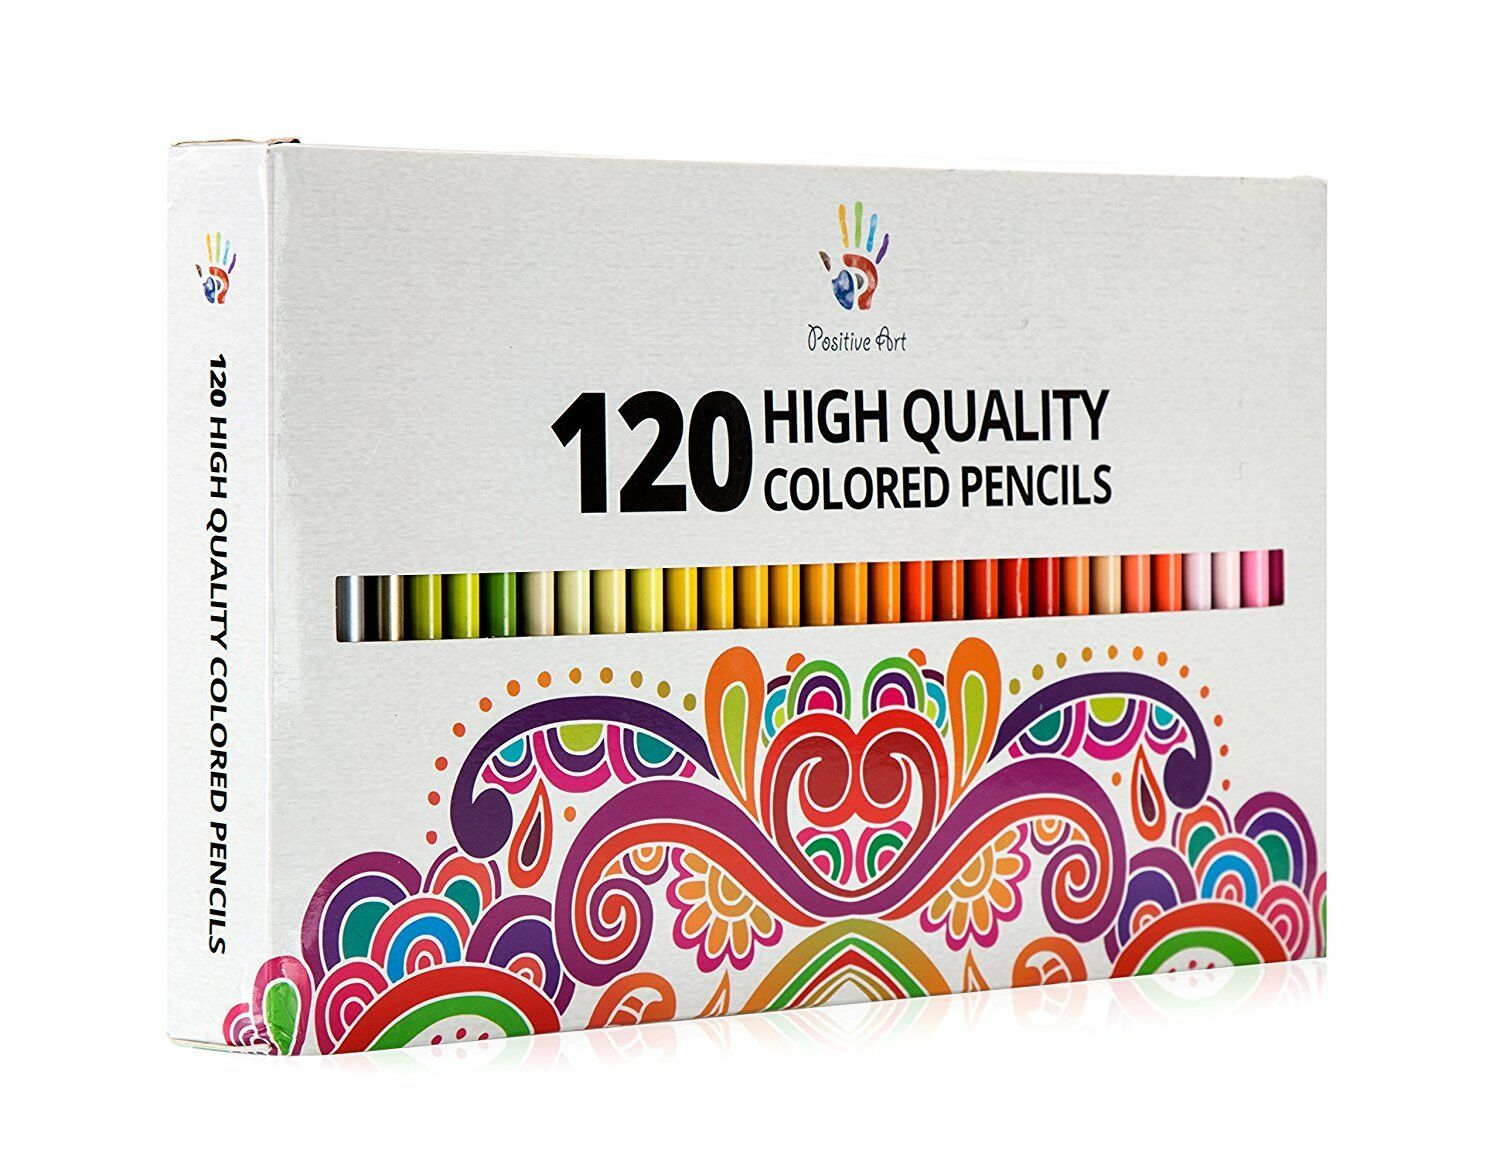 Positive Art Colored Pencils 120 Unique Colors Perfect For Adult Coloring Books